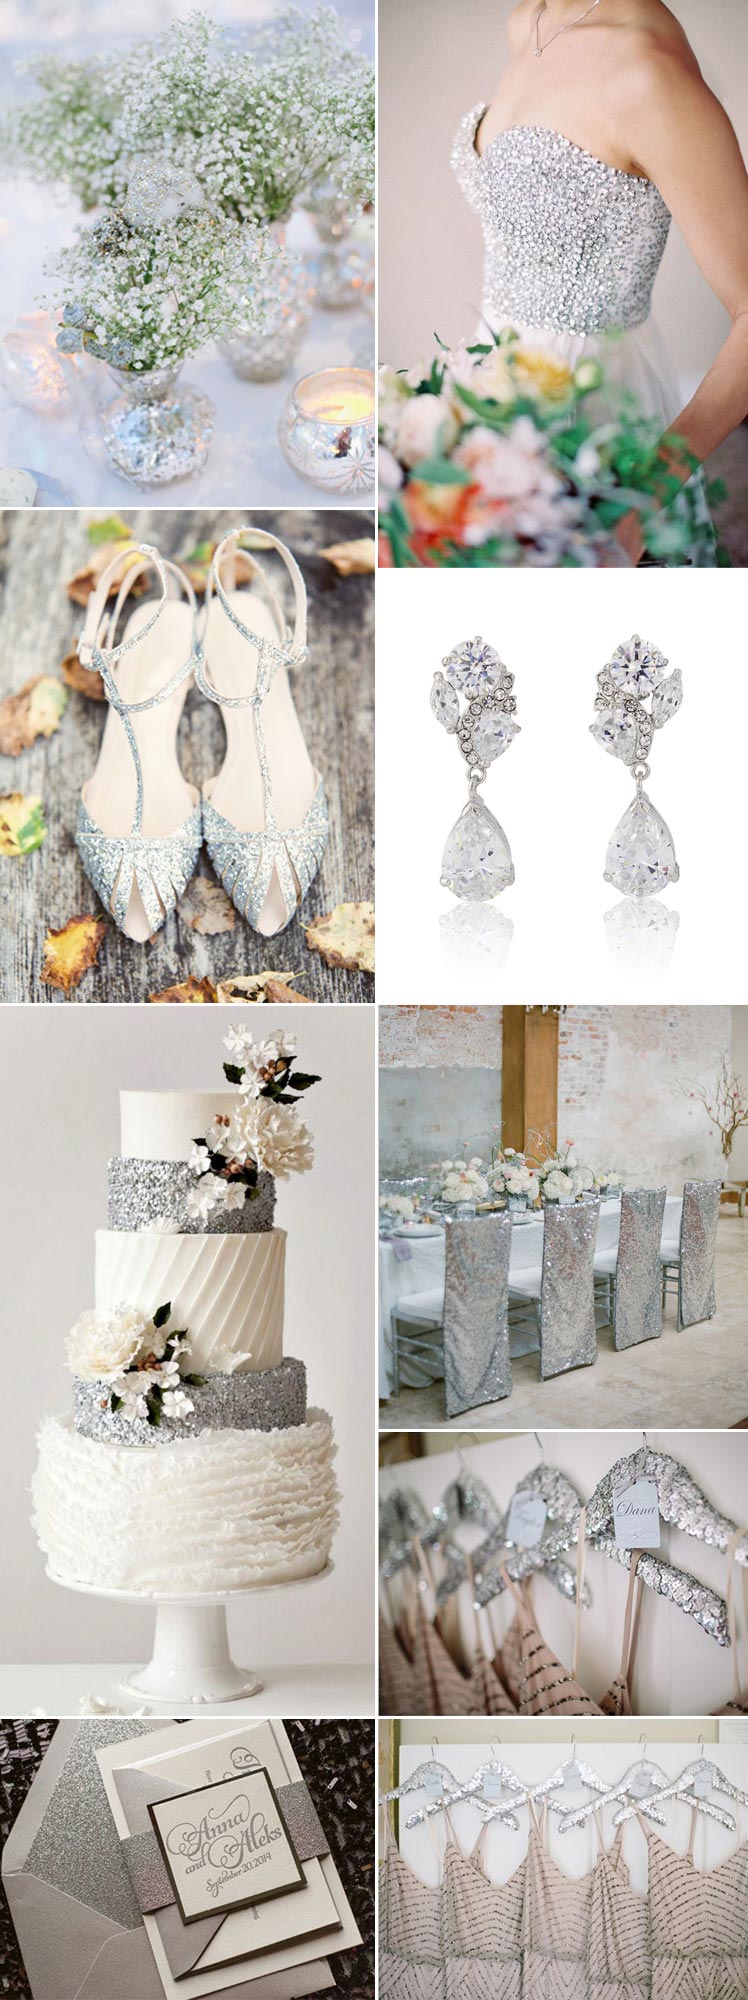 April diamond birthstone wedding theme ideas